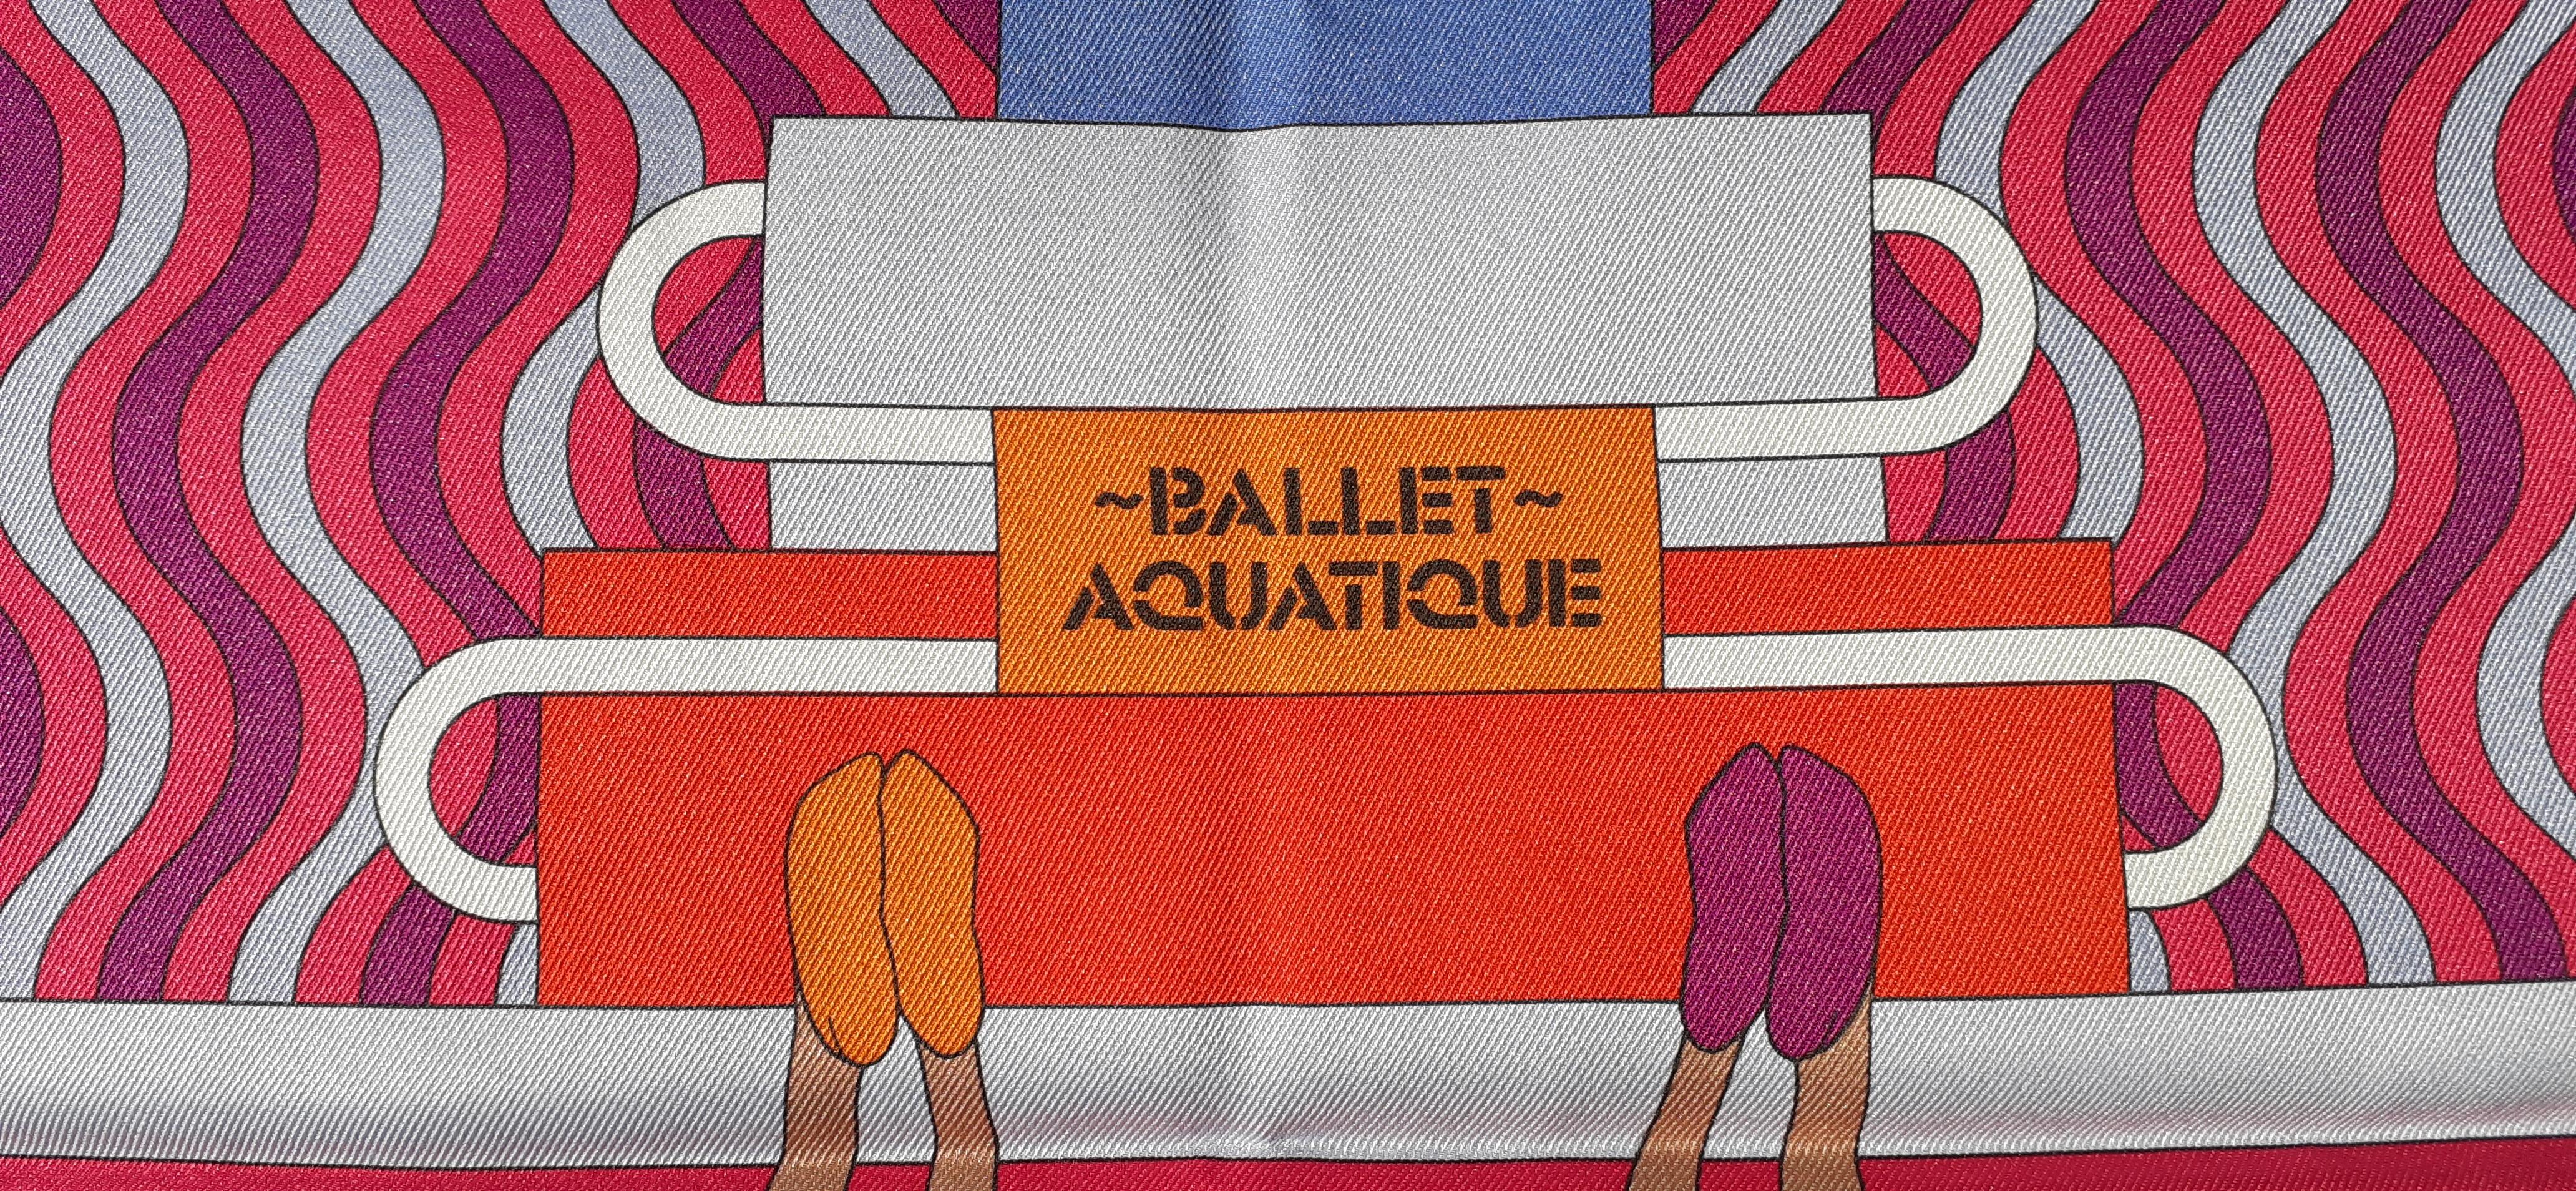 Hermès Silk Scarf Ballet Aquatique Rouge Bleu Jean Ciel 68 cm  5